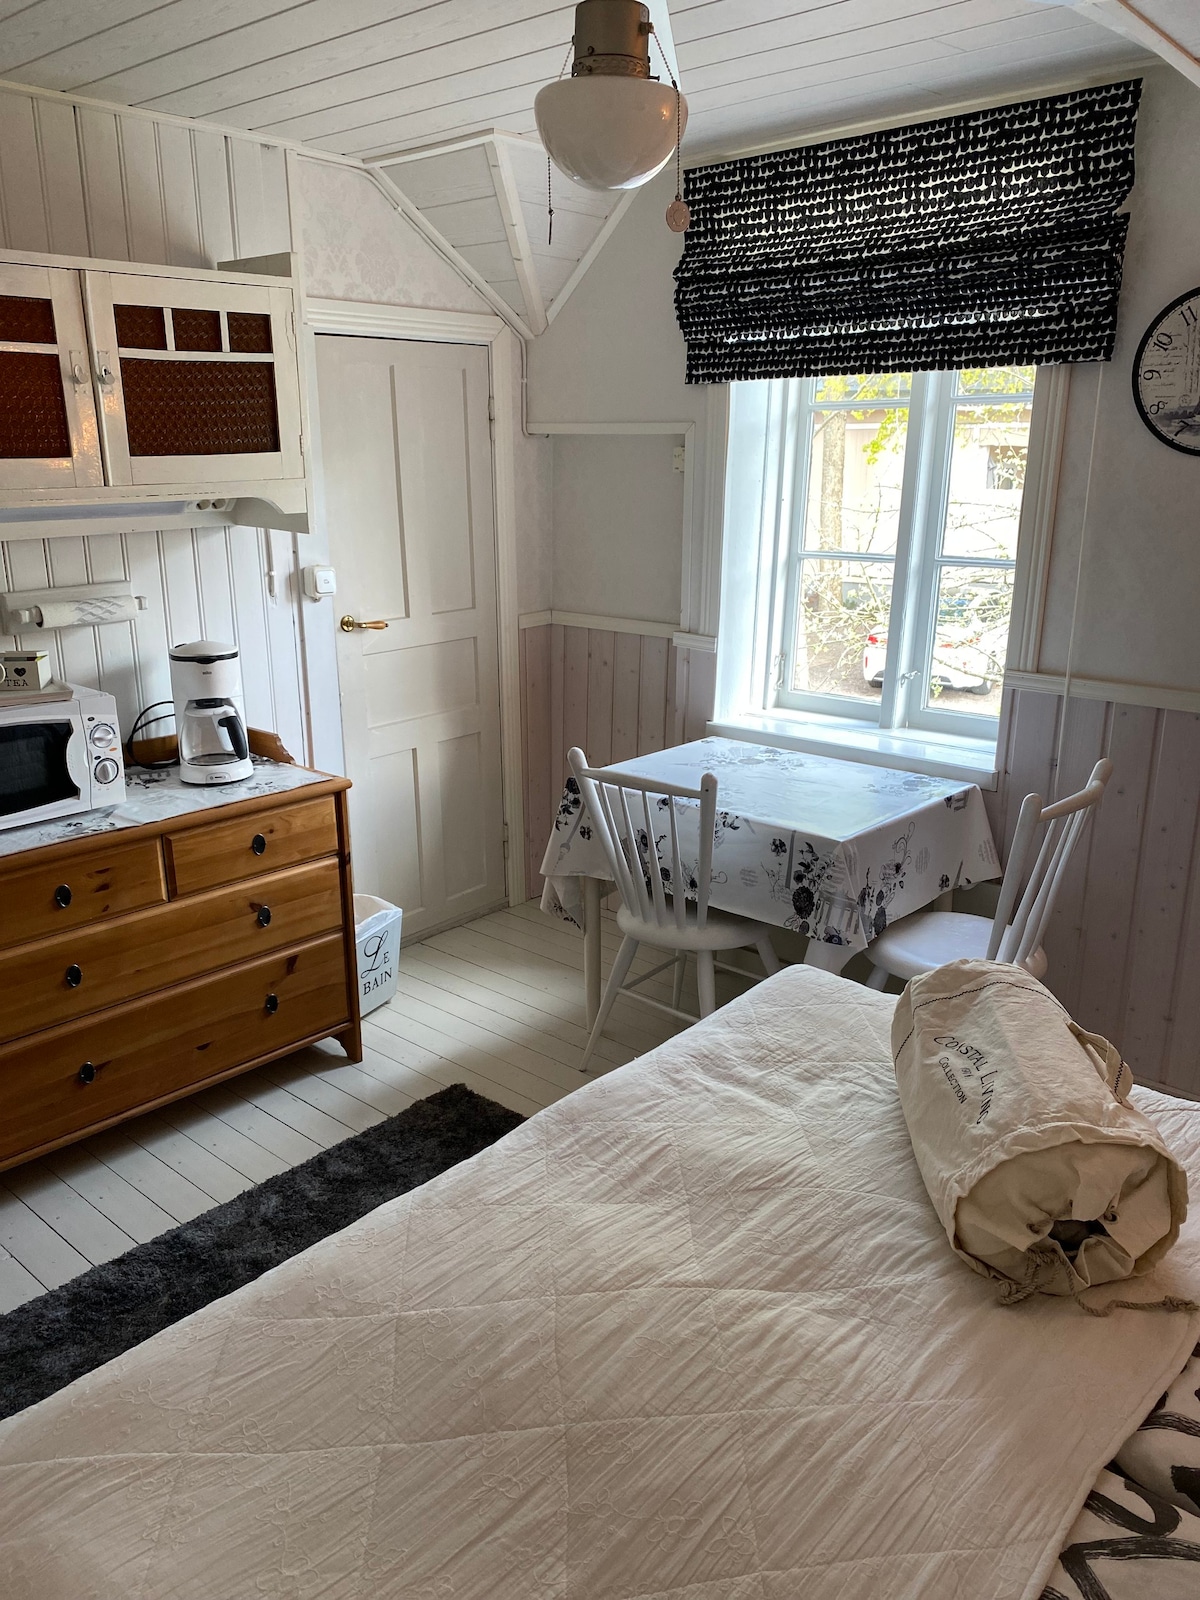 Väski Holiday Rentals & Homes - Naantali, Finland | Airbnb